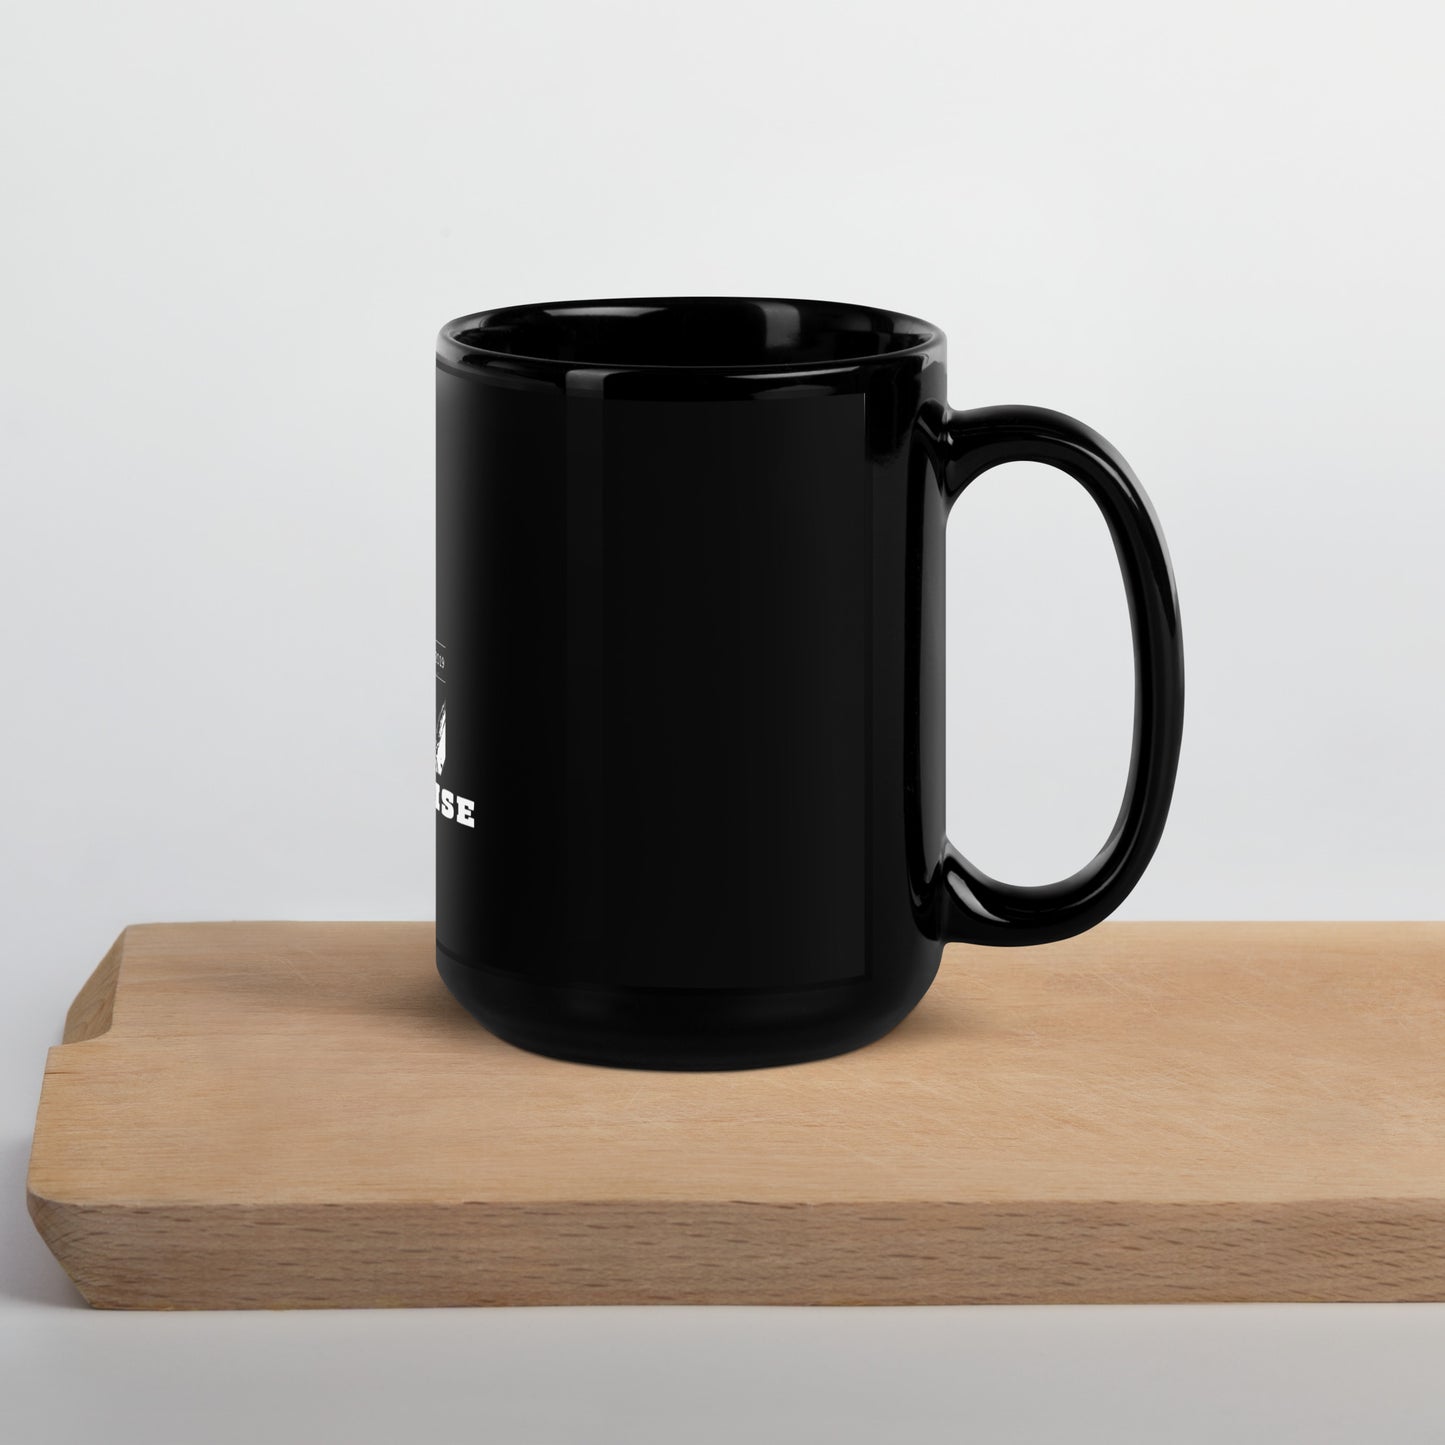 "CLAY Enterprise brand/logo" Large Bed/Breakfast Mug - Black